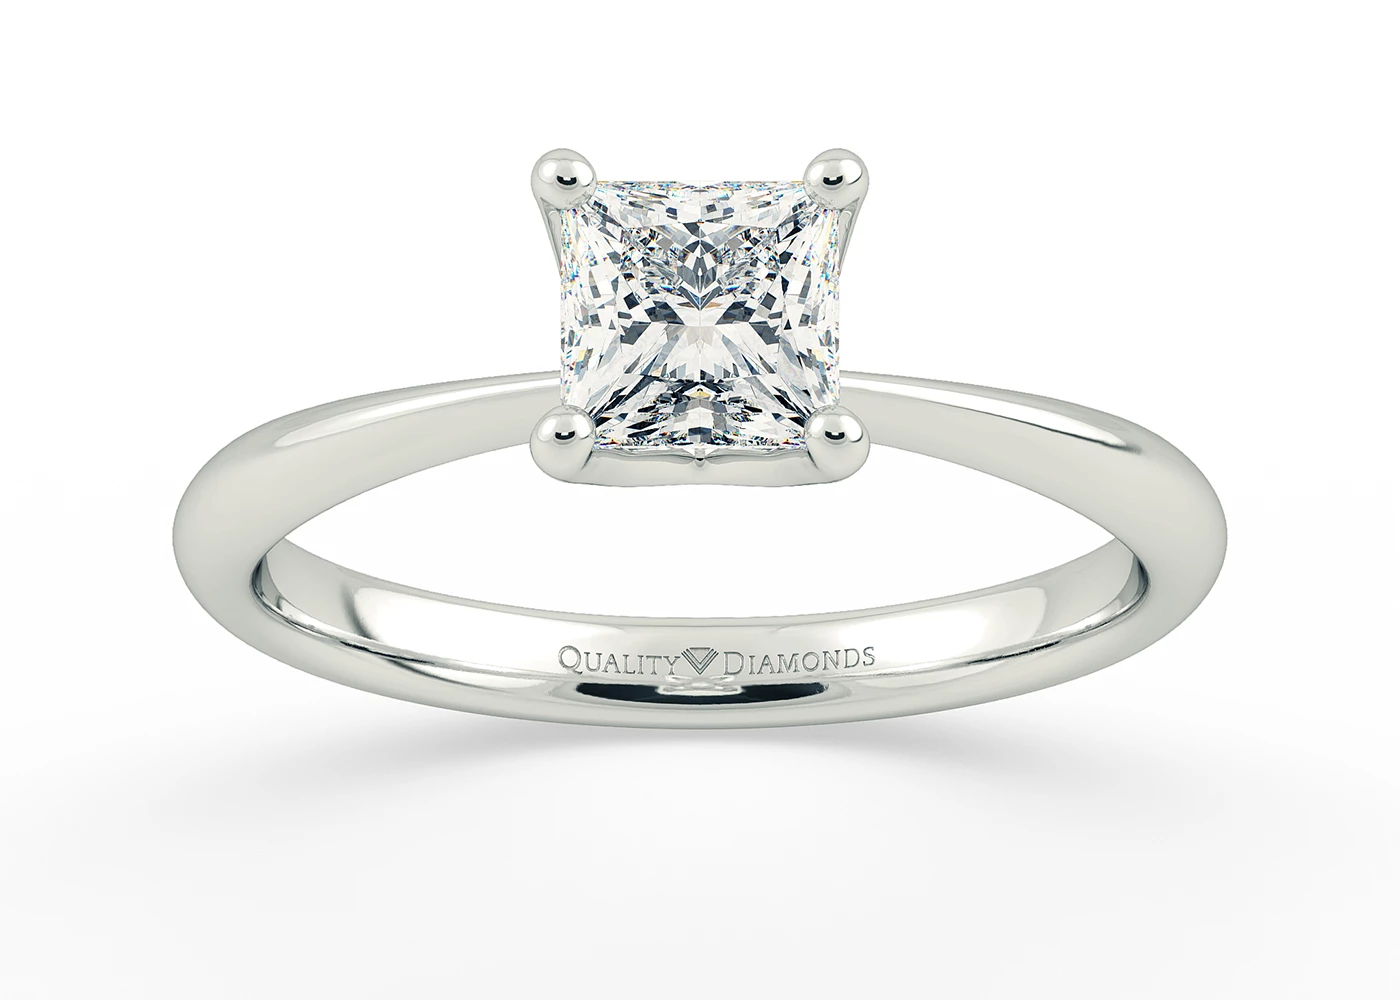 Princess Amorette Diamond Ring in Palladium